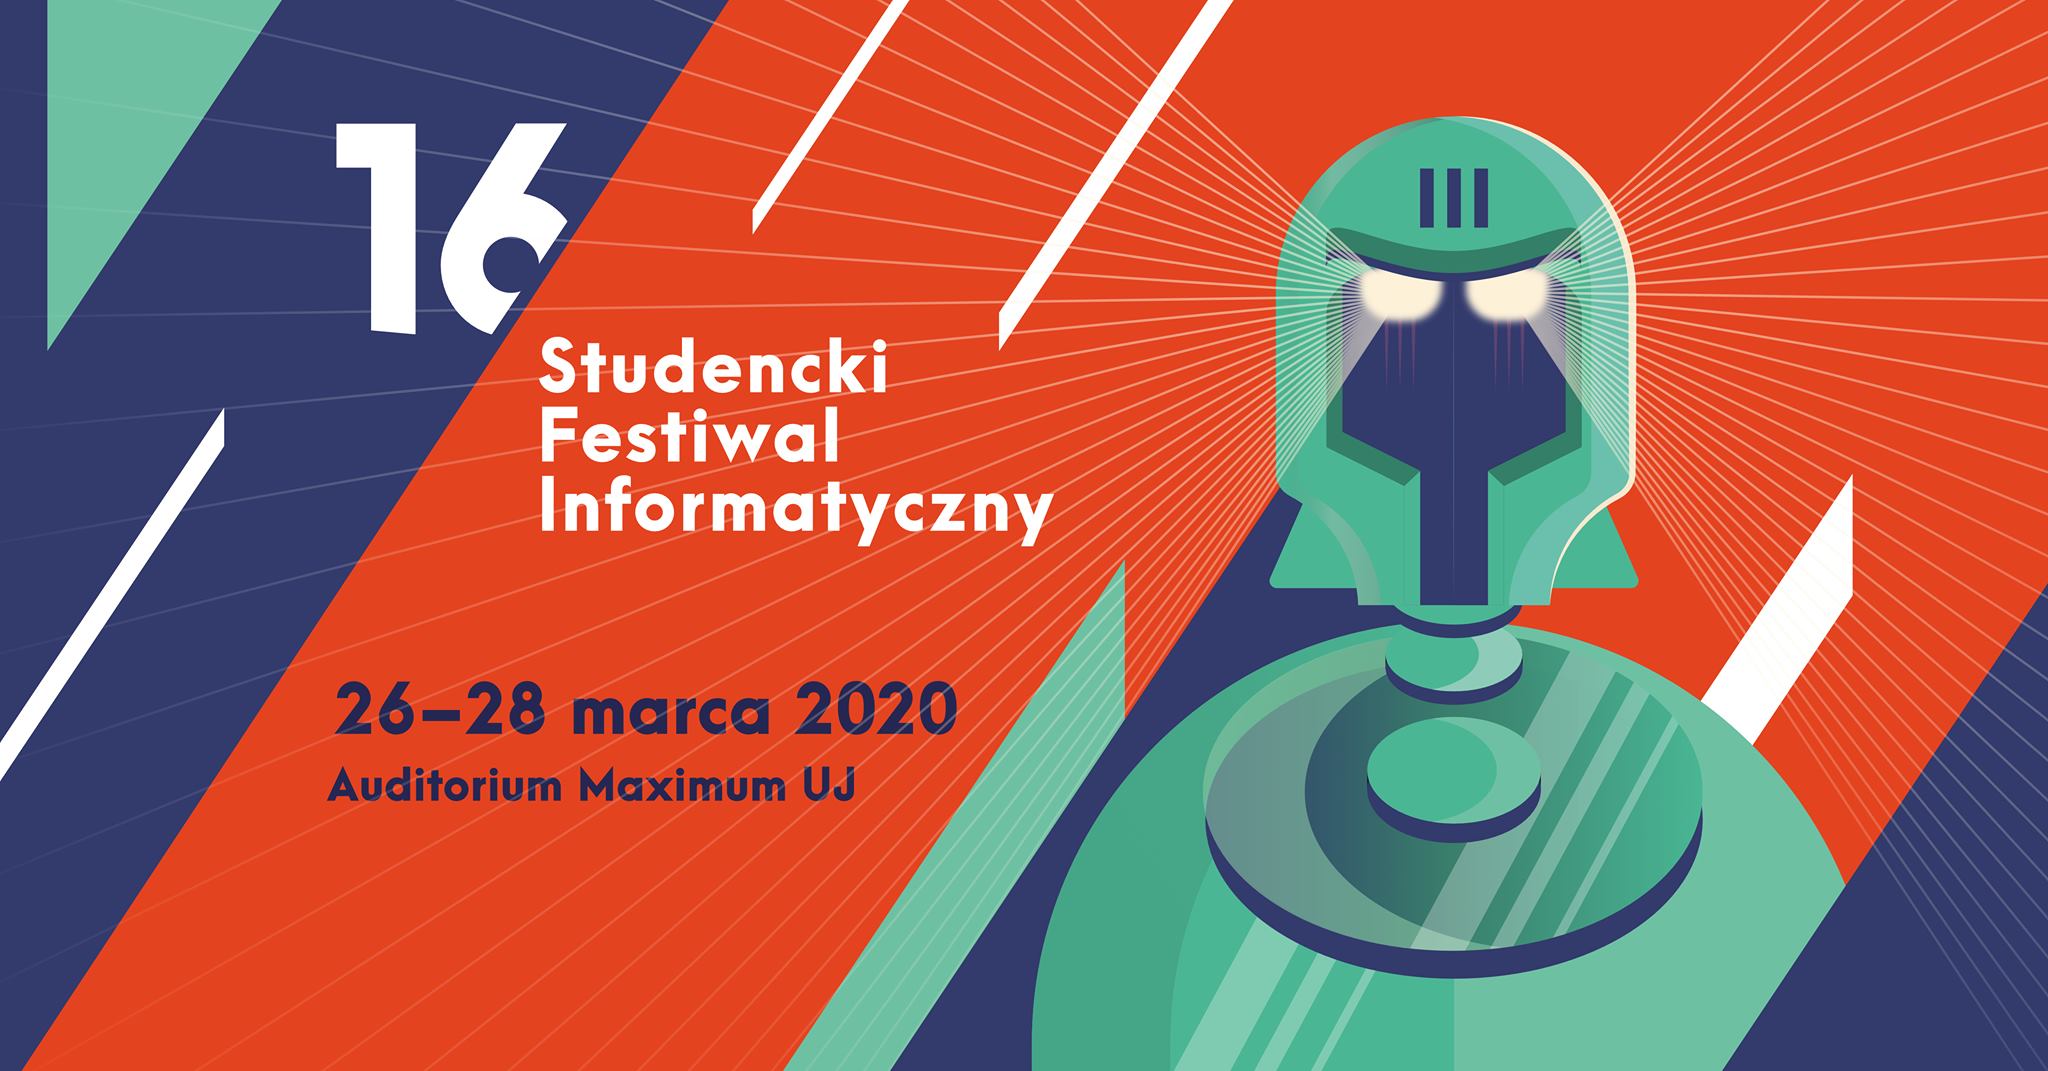 16-studencki-festiwal-informatyczny-2020